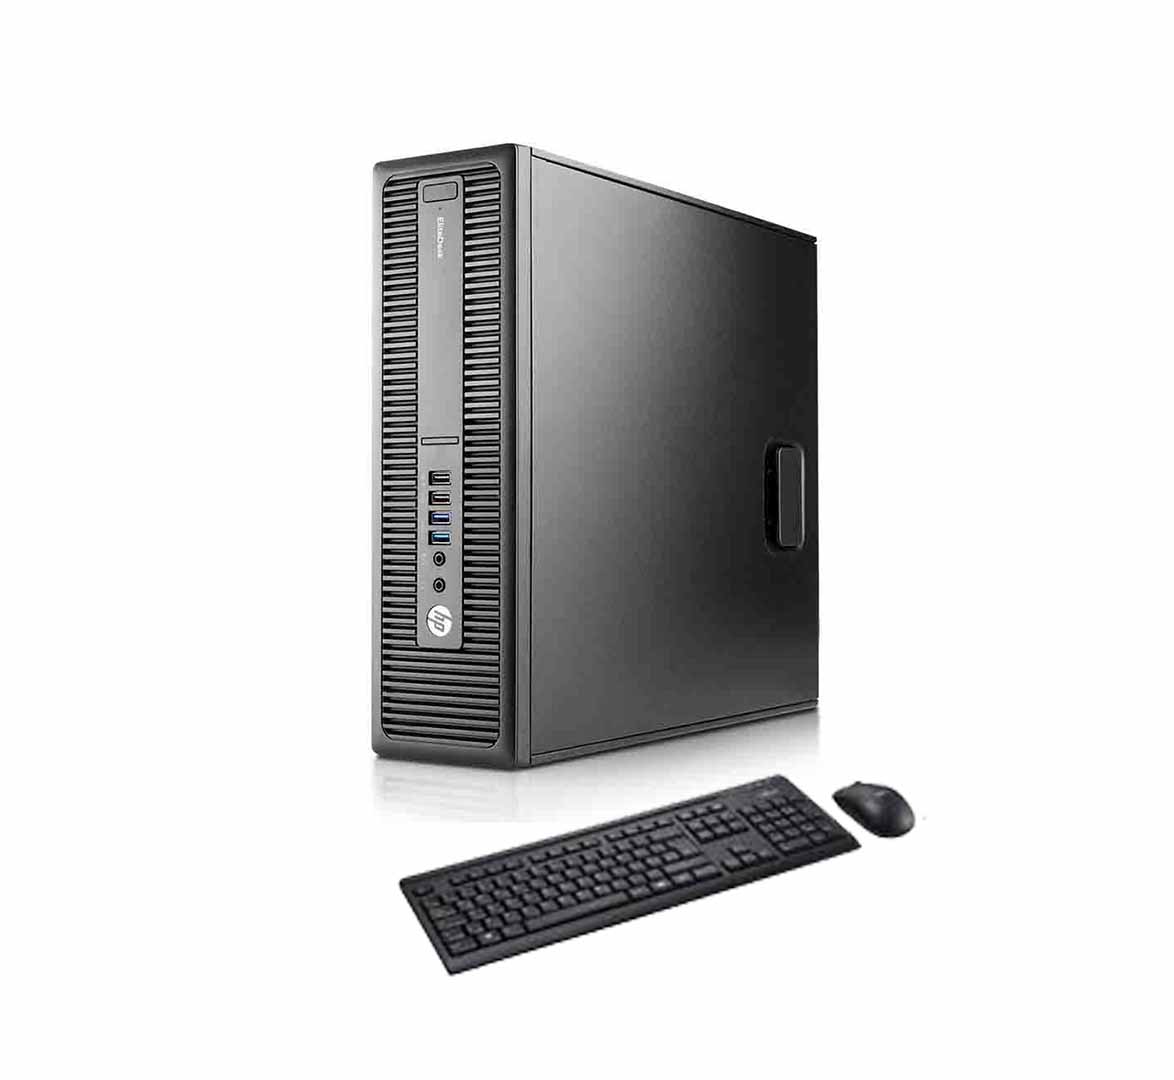 HP EliteDesk 800 G2 SFF Business Desktop PC, Intel Core i5-6th Generation CPU, 8GB RAM, 256GB SSD, Wifi, Windows 10 Pro